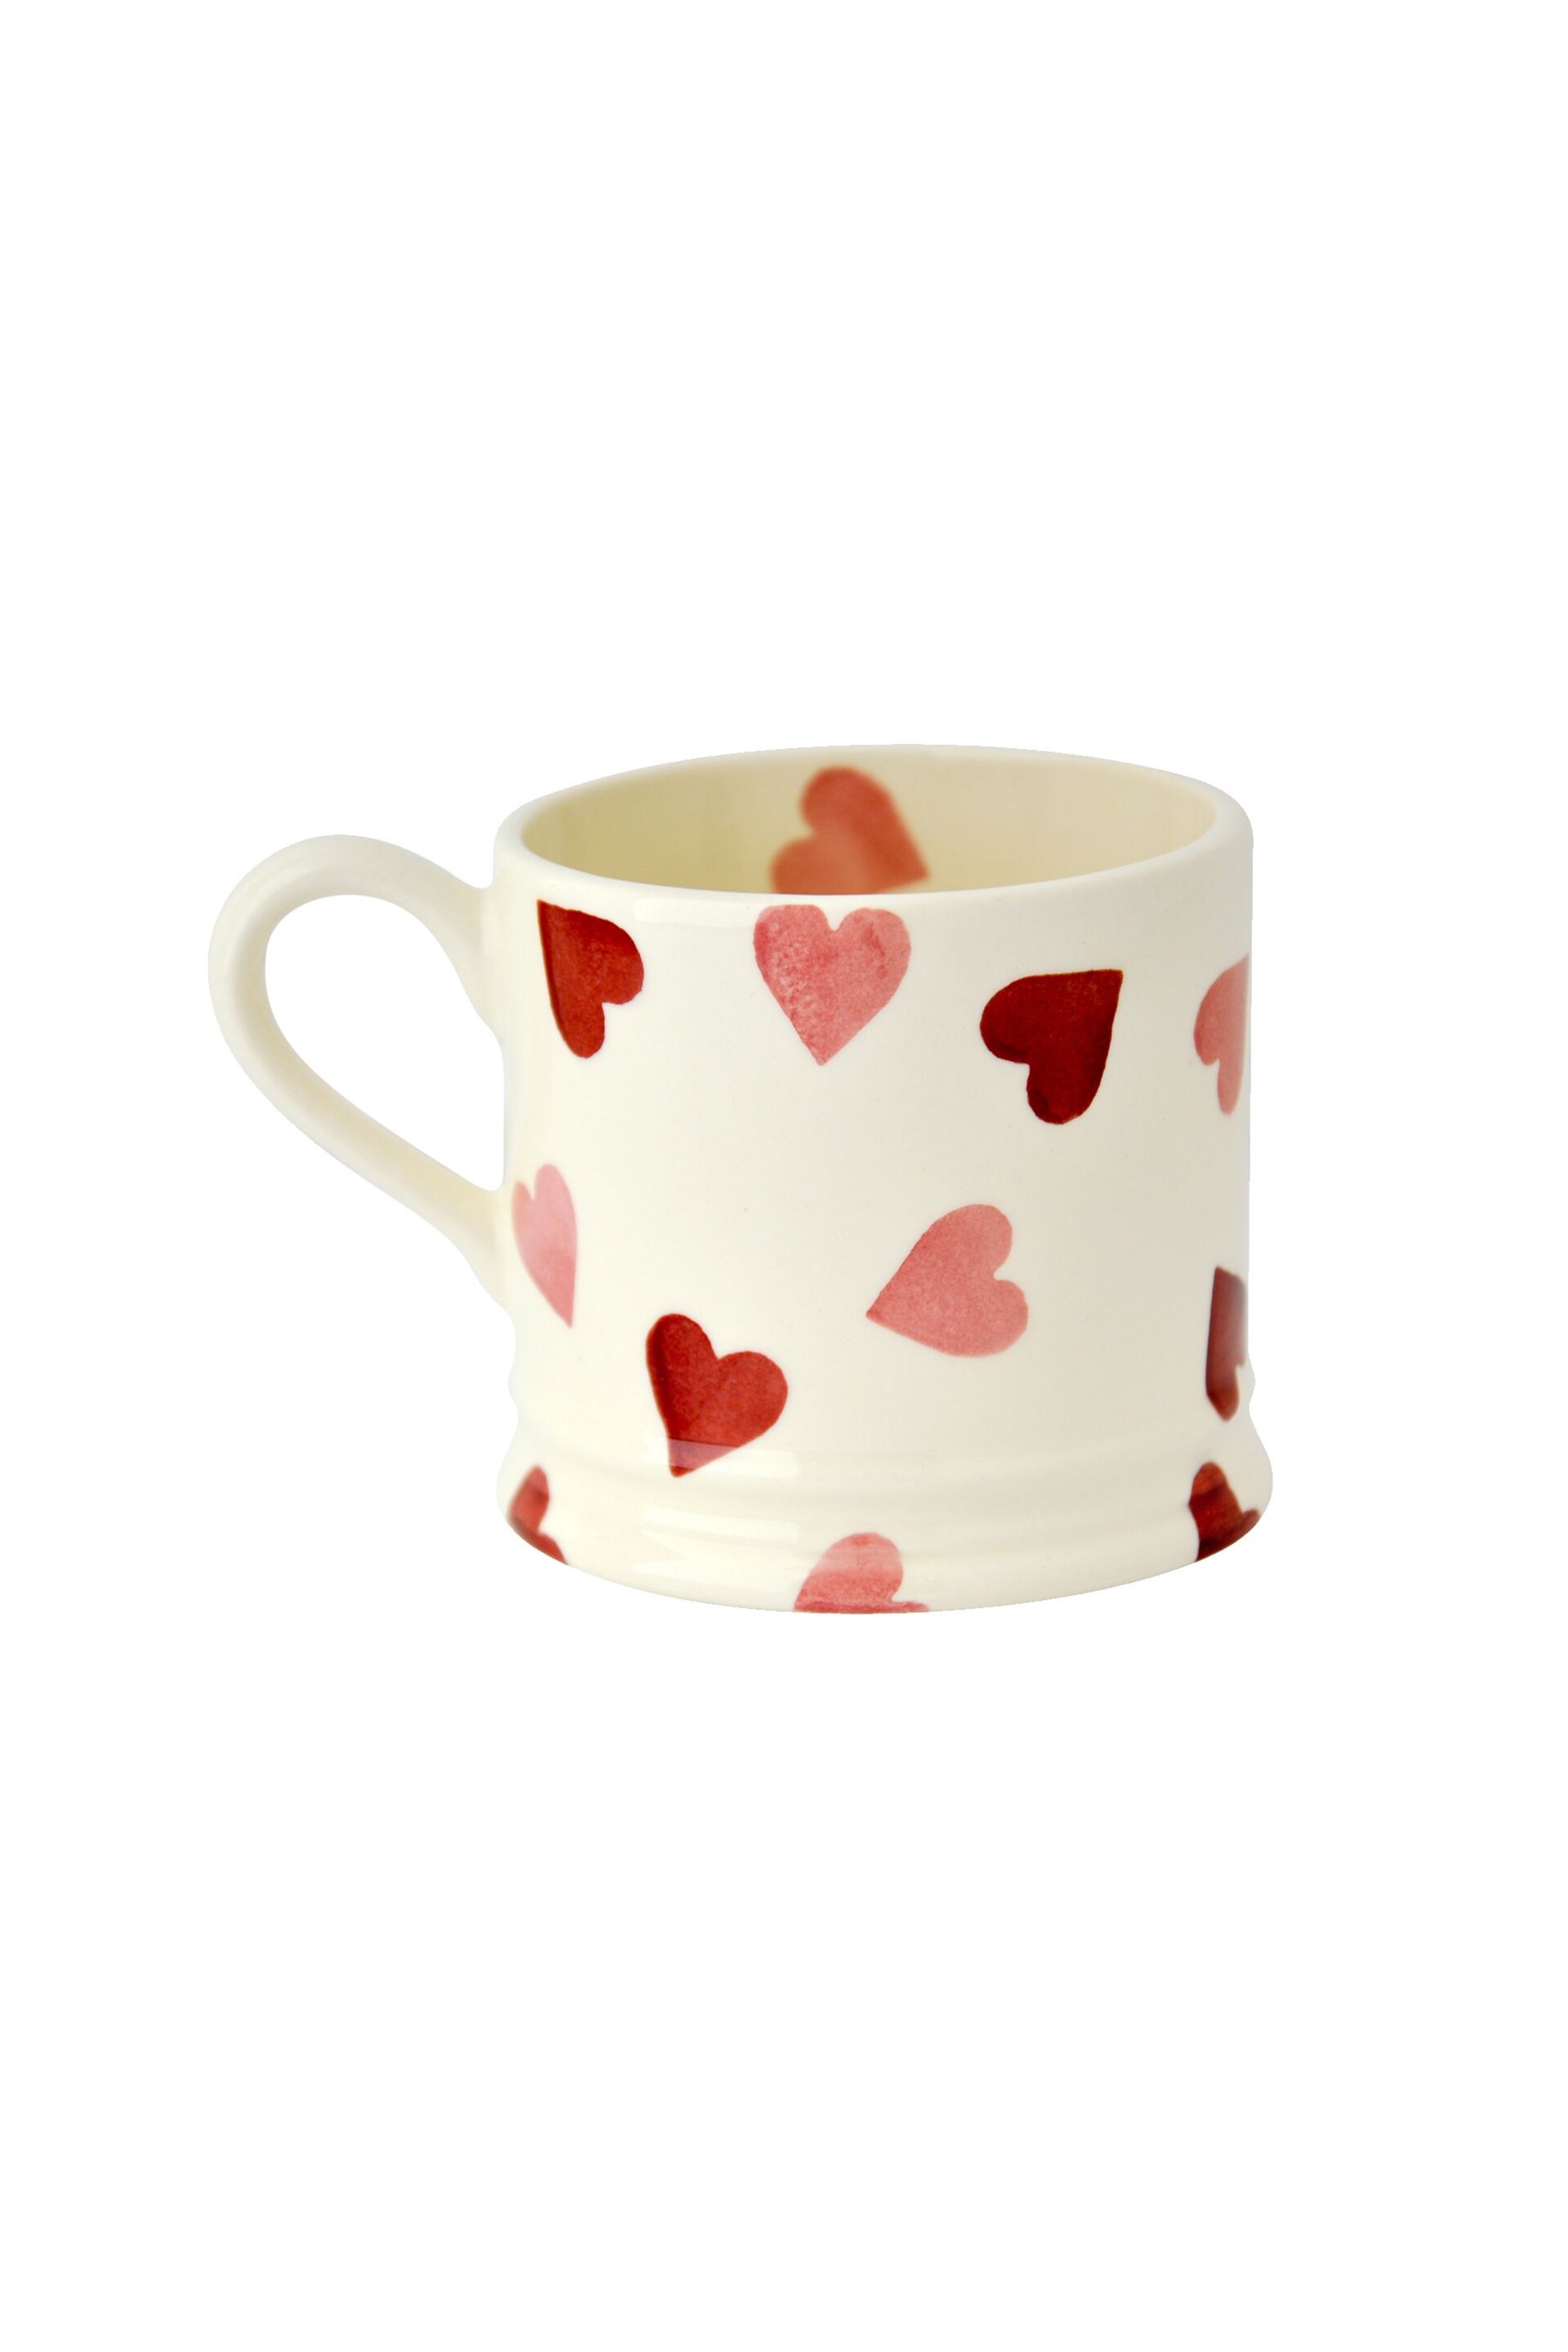 Emma Bridgewater Cream Pink Hearts Small Mug - Image 4 of 4